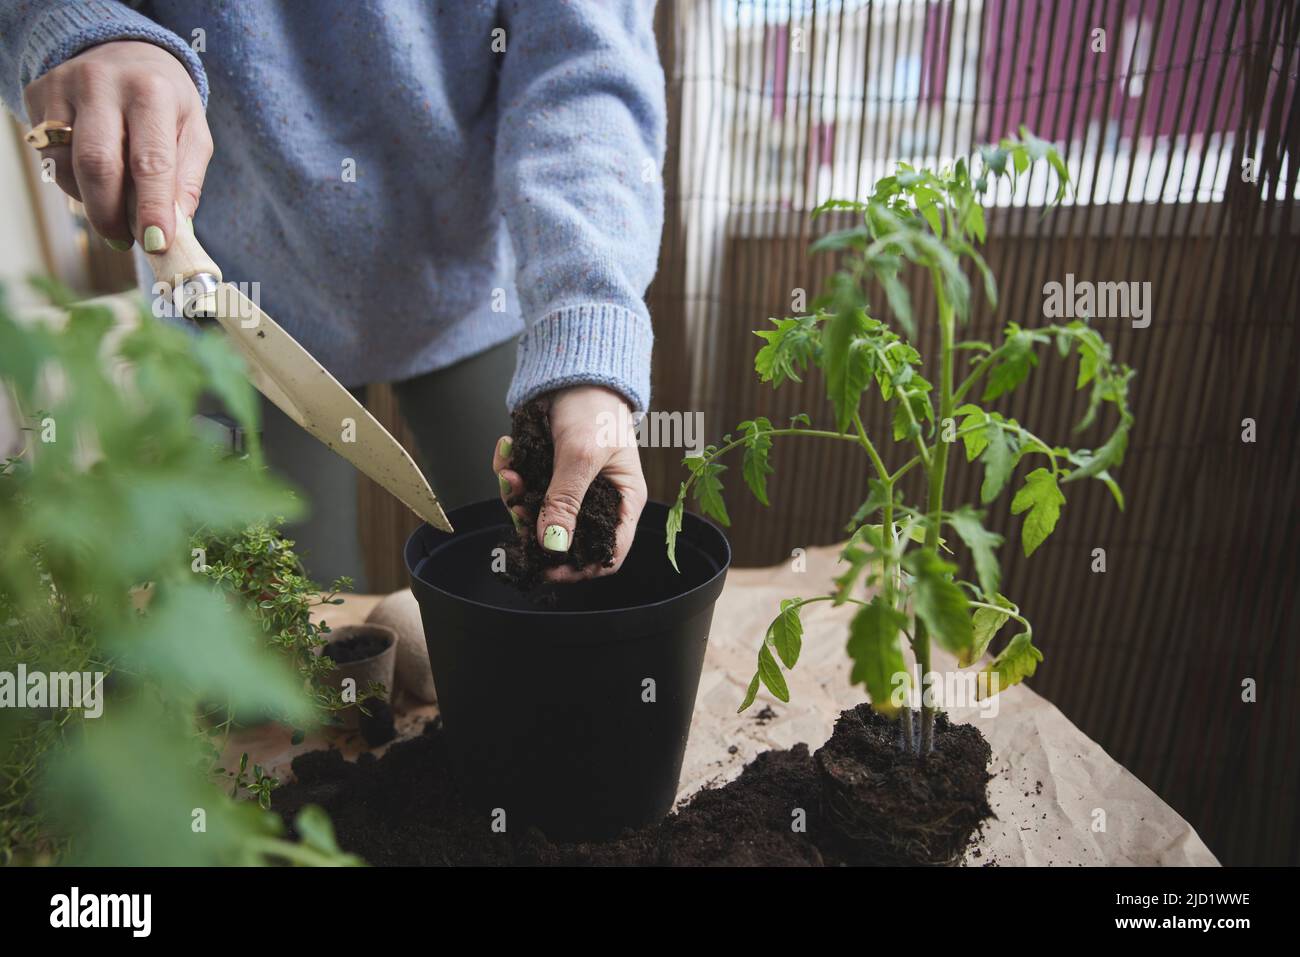 Woman planting tomato plants Stock Photo